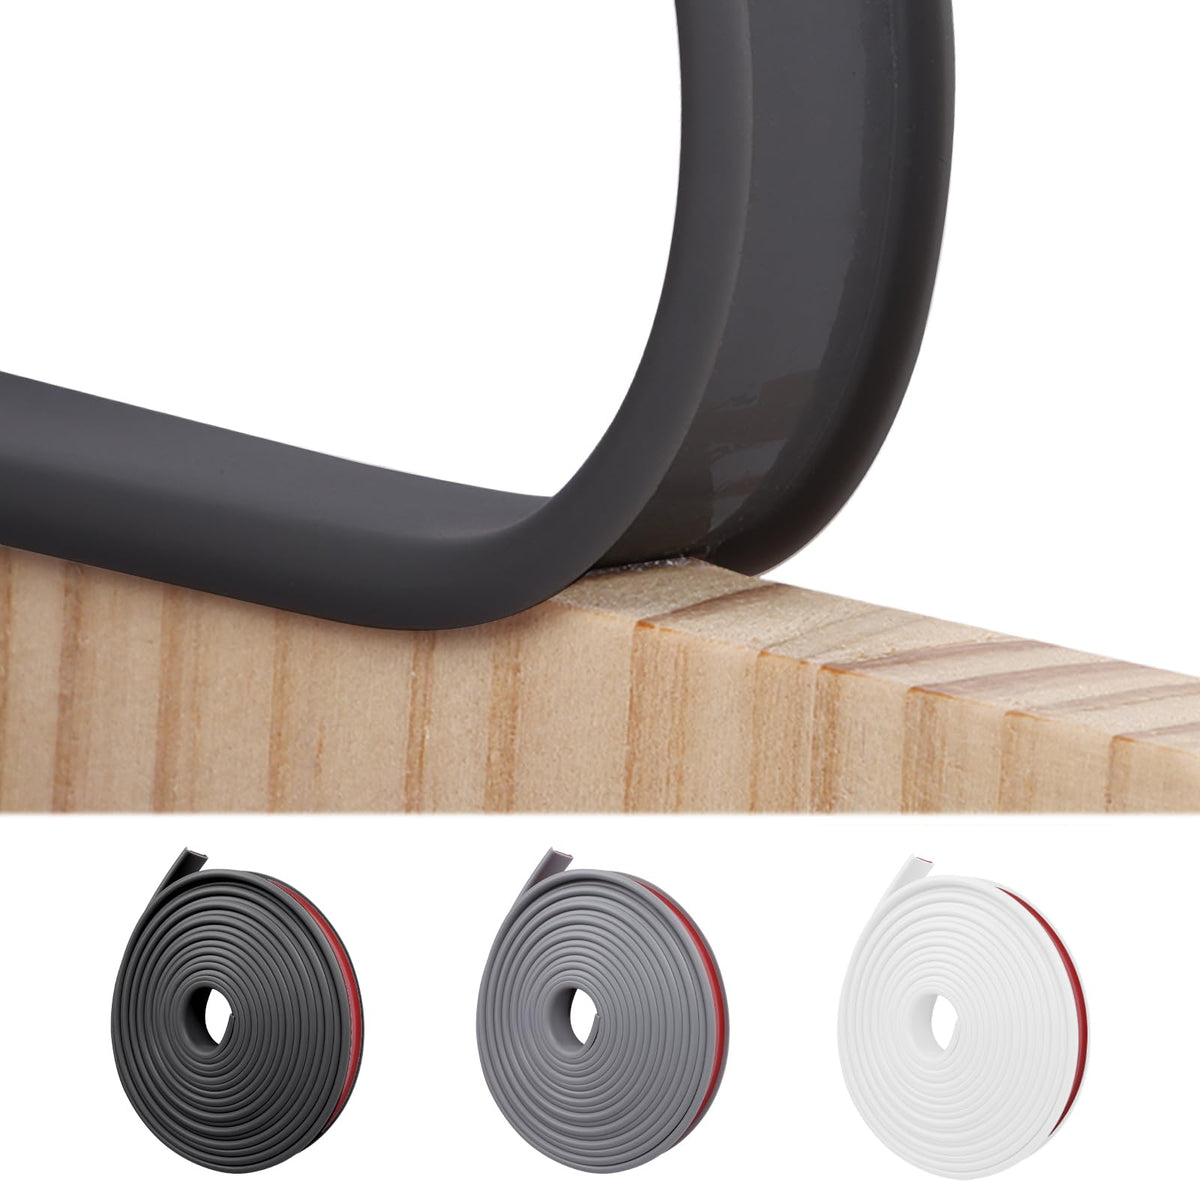 NiCoLa U-Shape Flexible Furniture Edge Banding, 5m×16mm Black TPE Self Adhesive Veneer Edging Strip Edge, DIY Furniture Edge Trim for Table Cabinets Chairs Shelves Restoration (Black, 16mm)